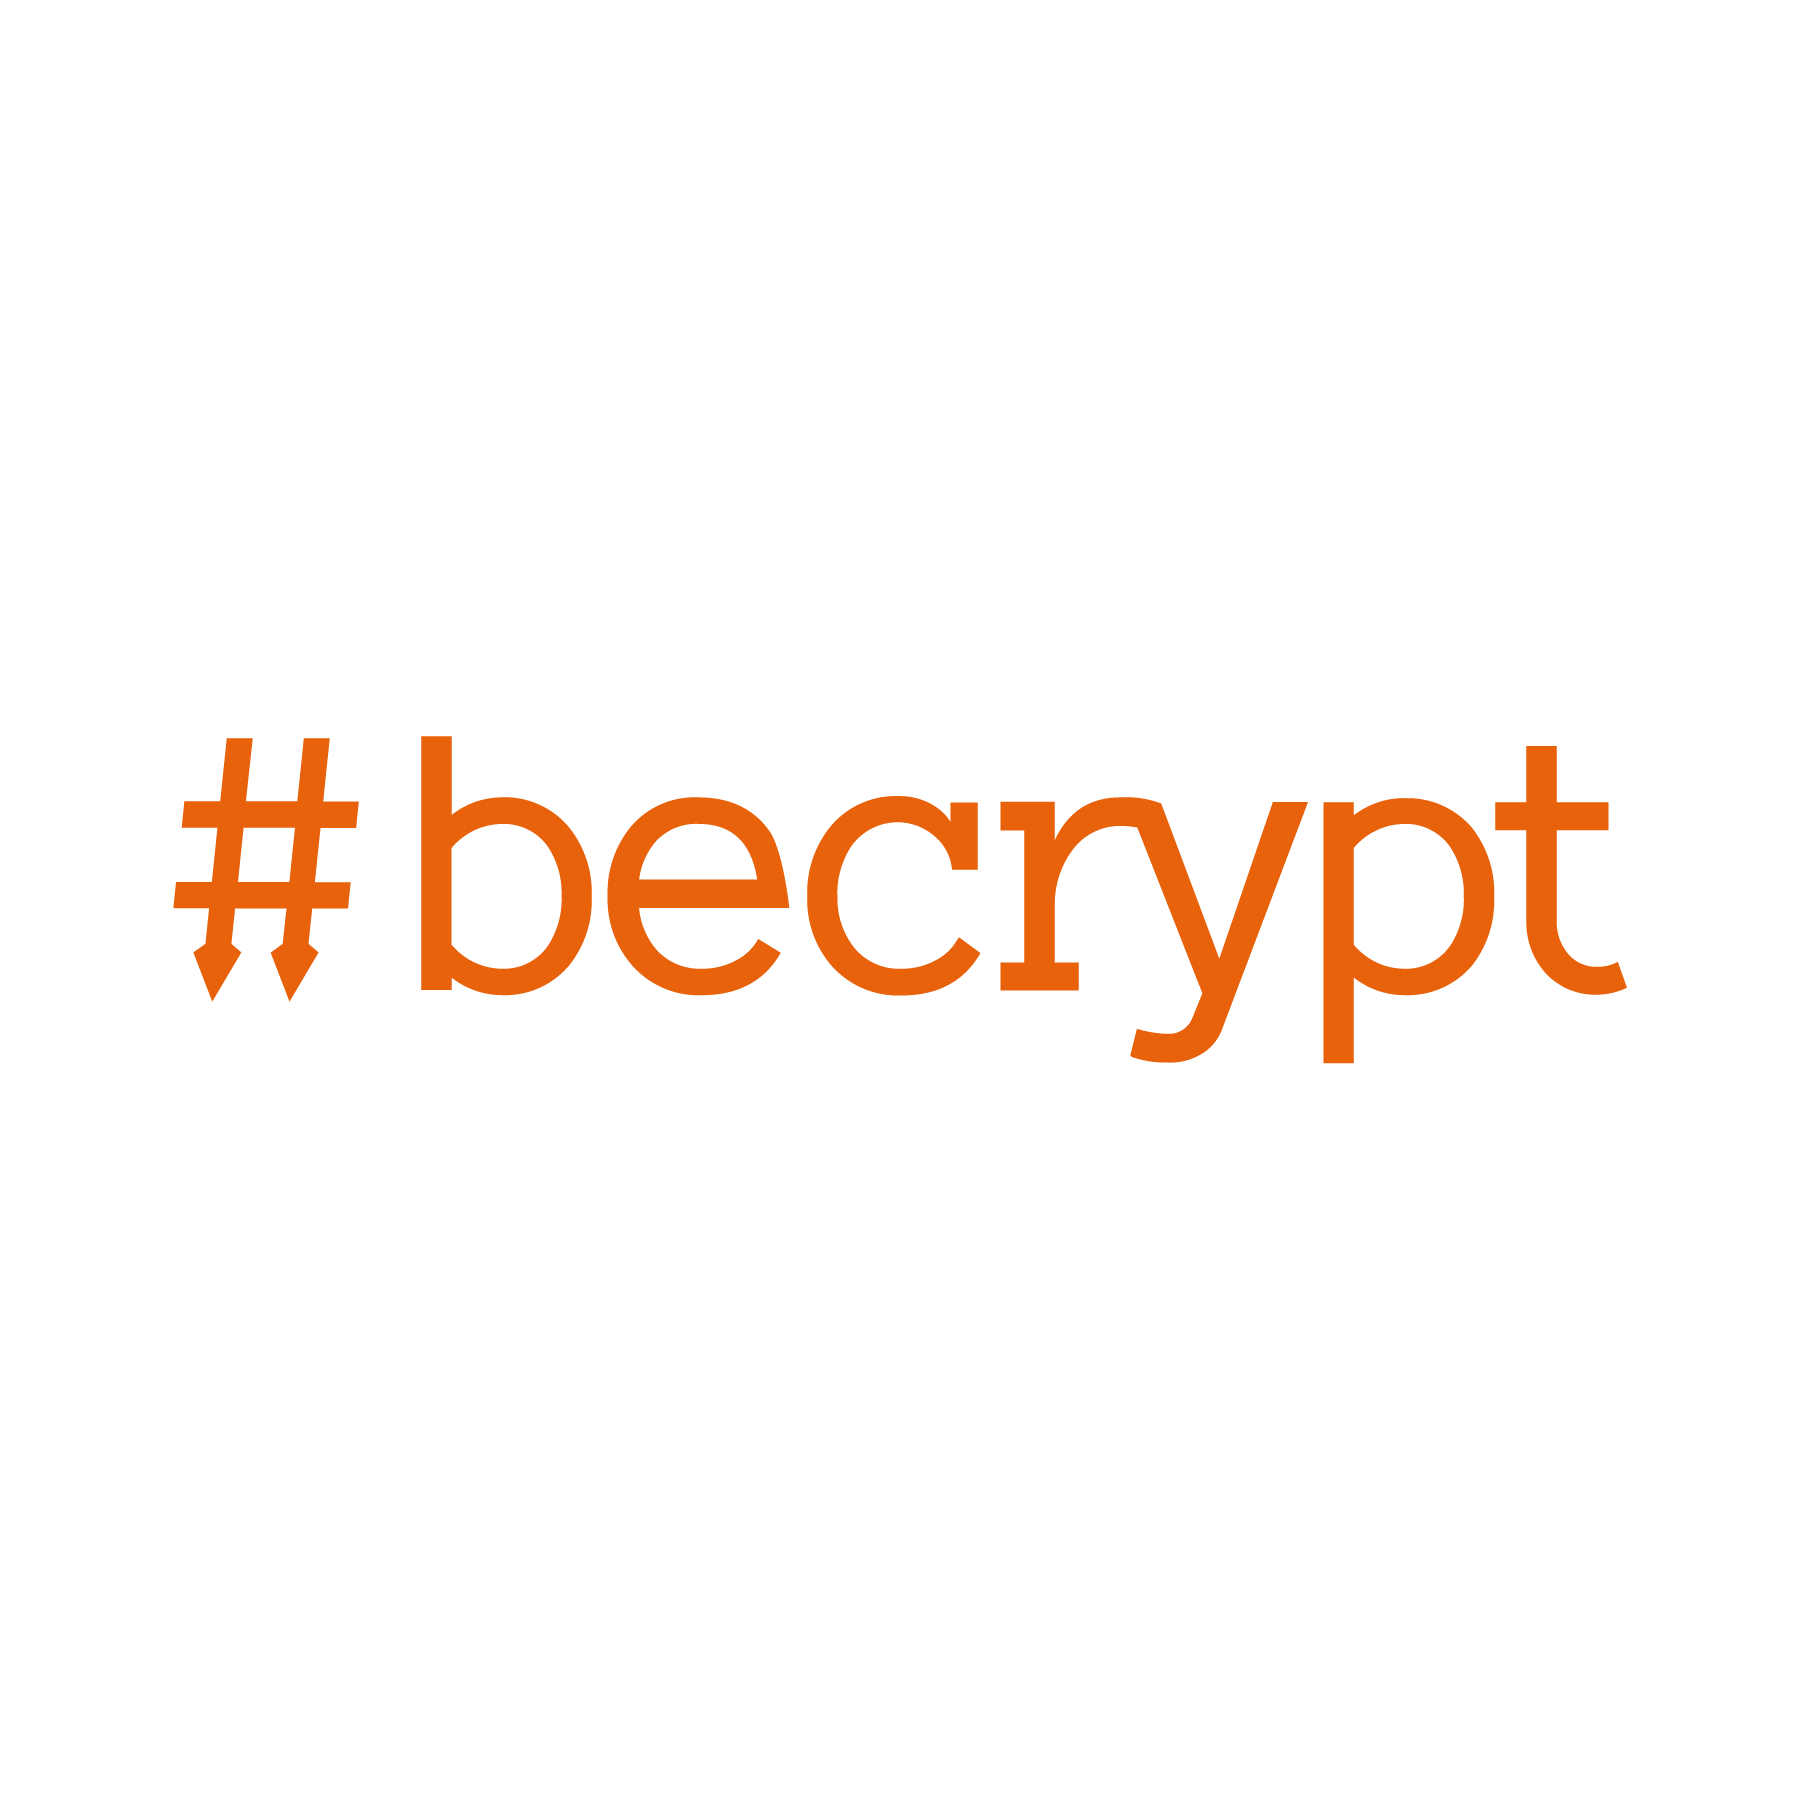 Becrypt Insights